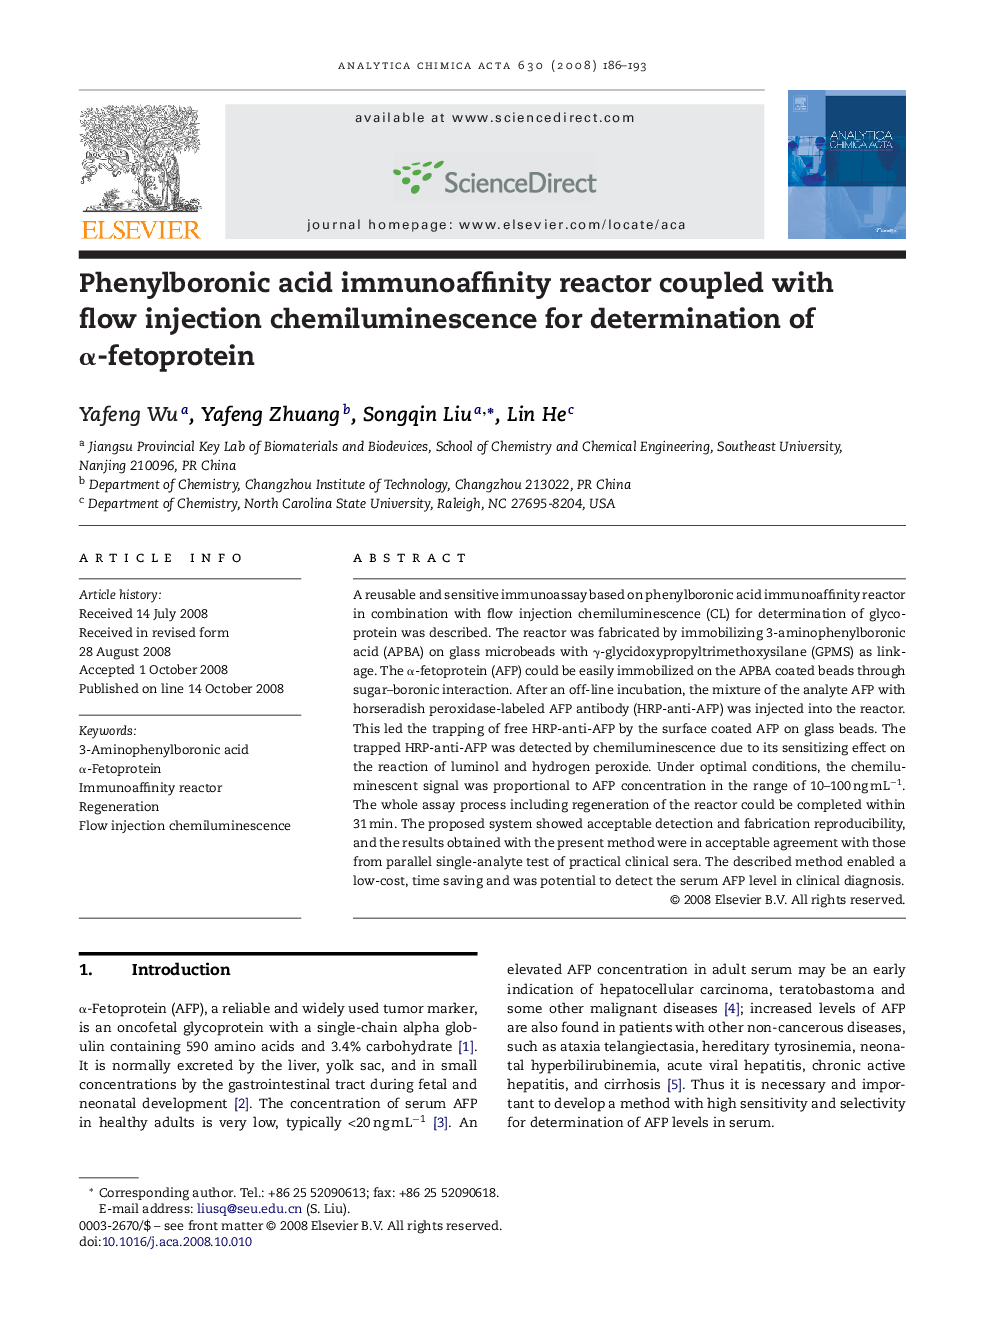 Phenylboronic acid immunoaffinity reactor coupled with flow injection chemiluminescence for determination of α-fetoprotein